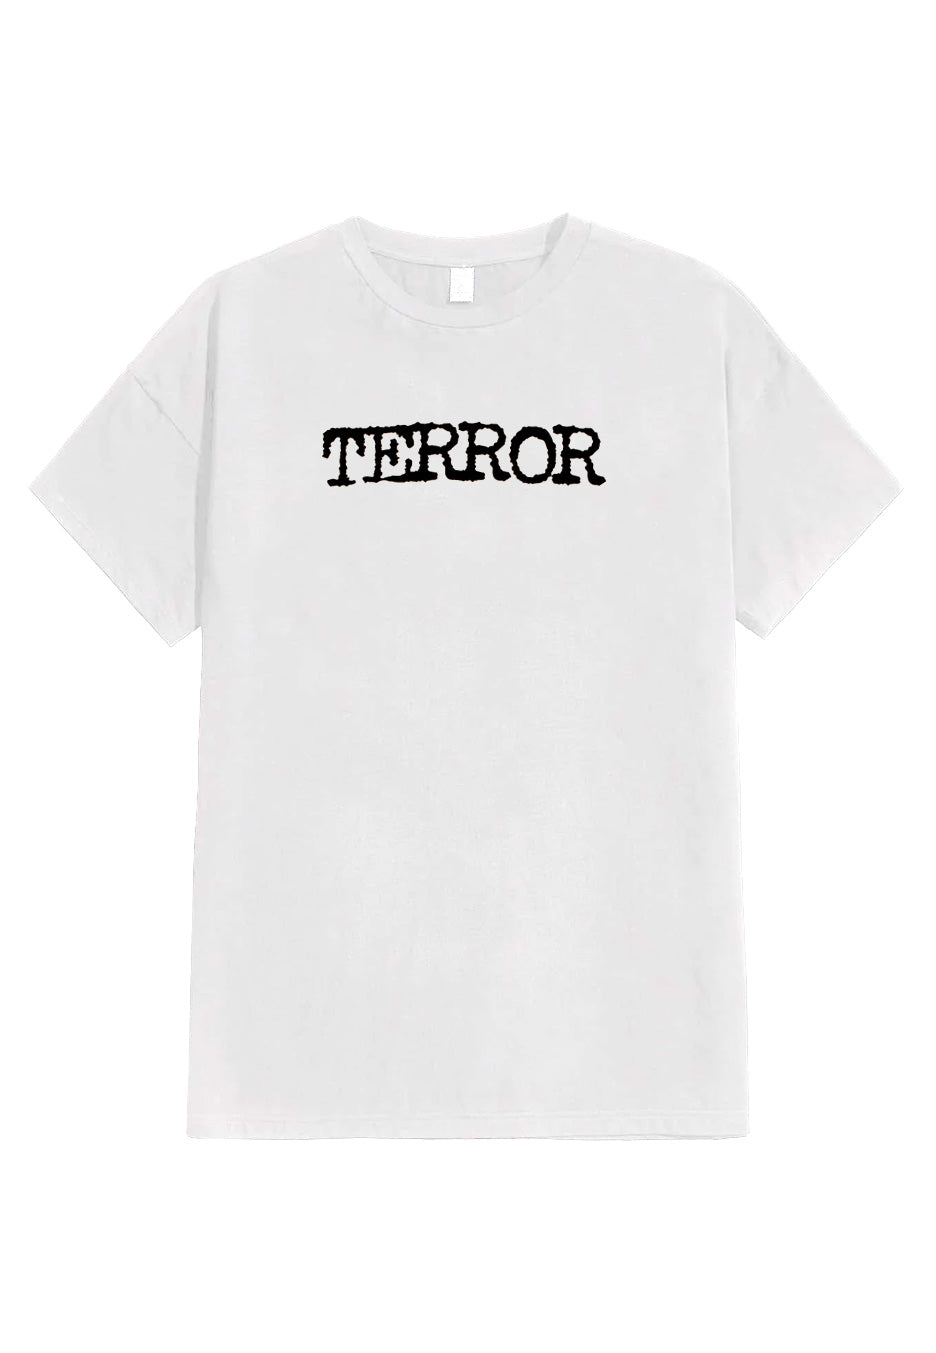 Terror - Pain Live White - T-Shirt